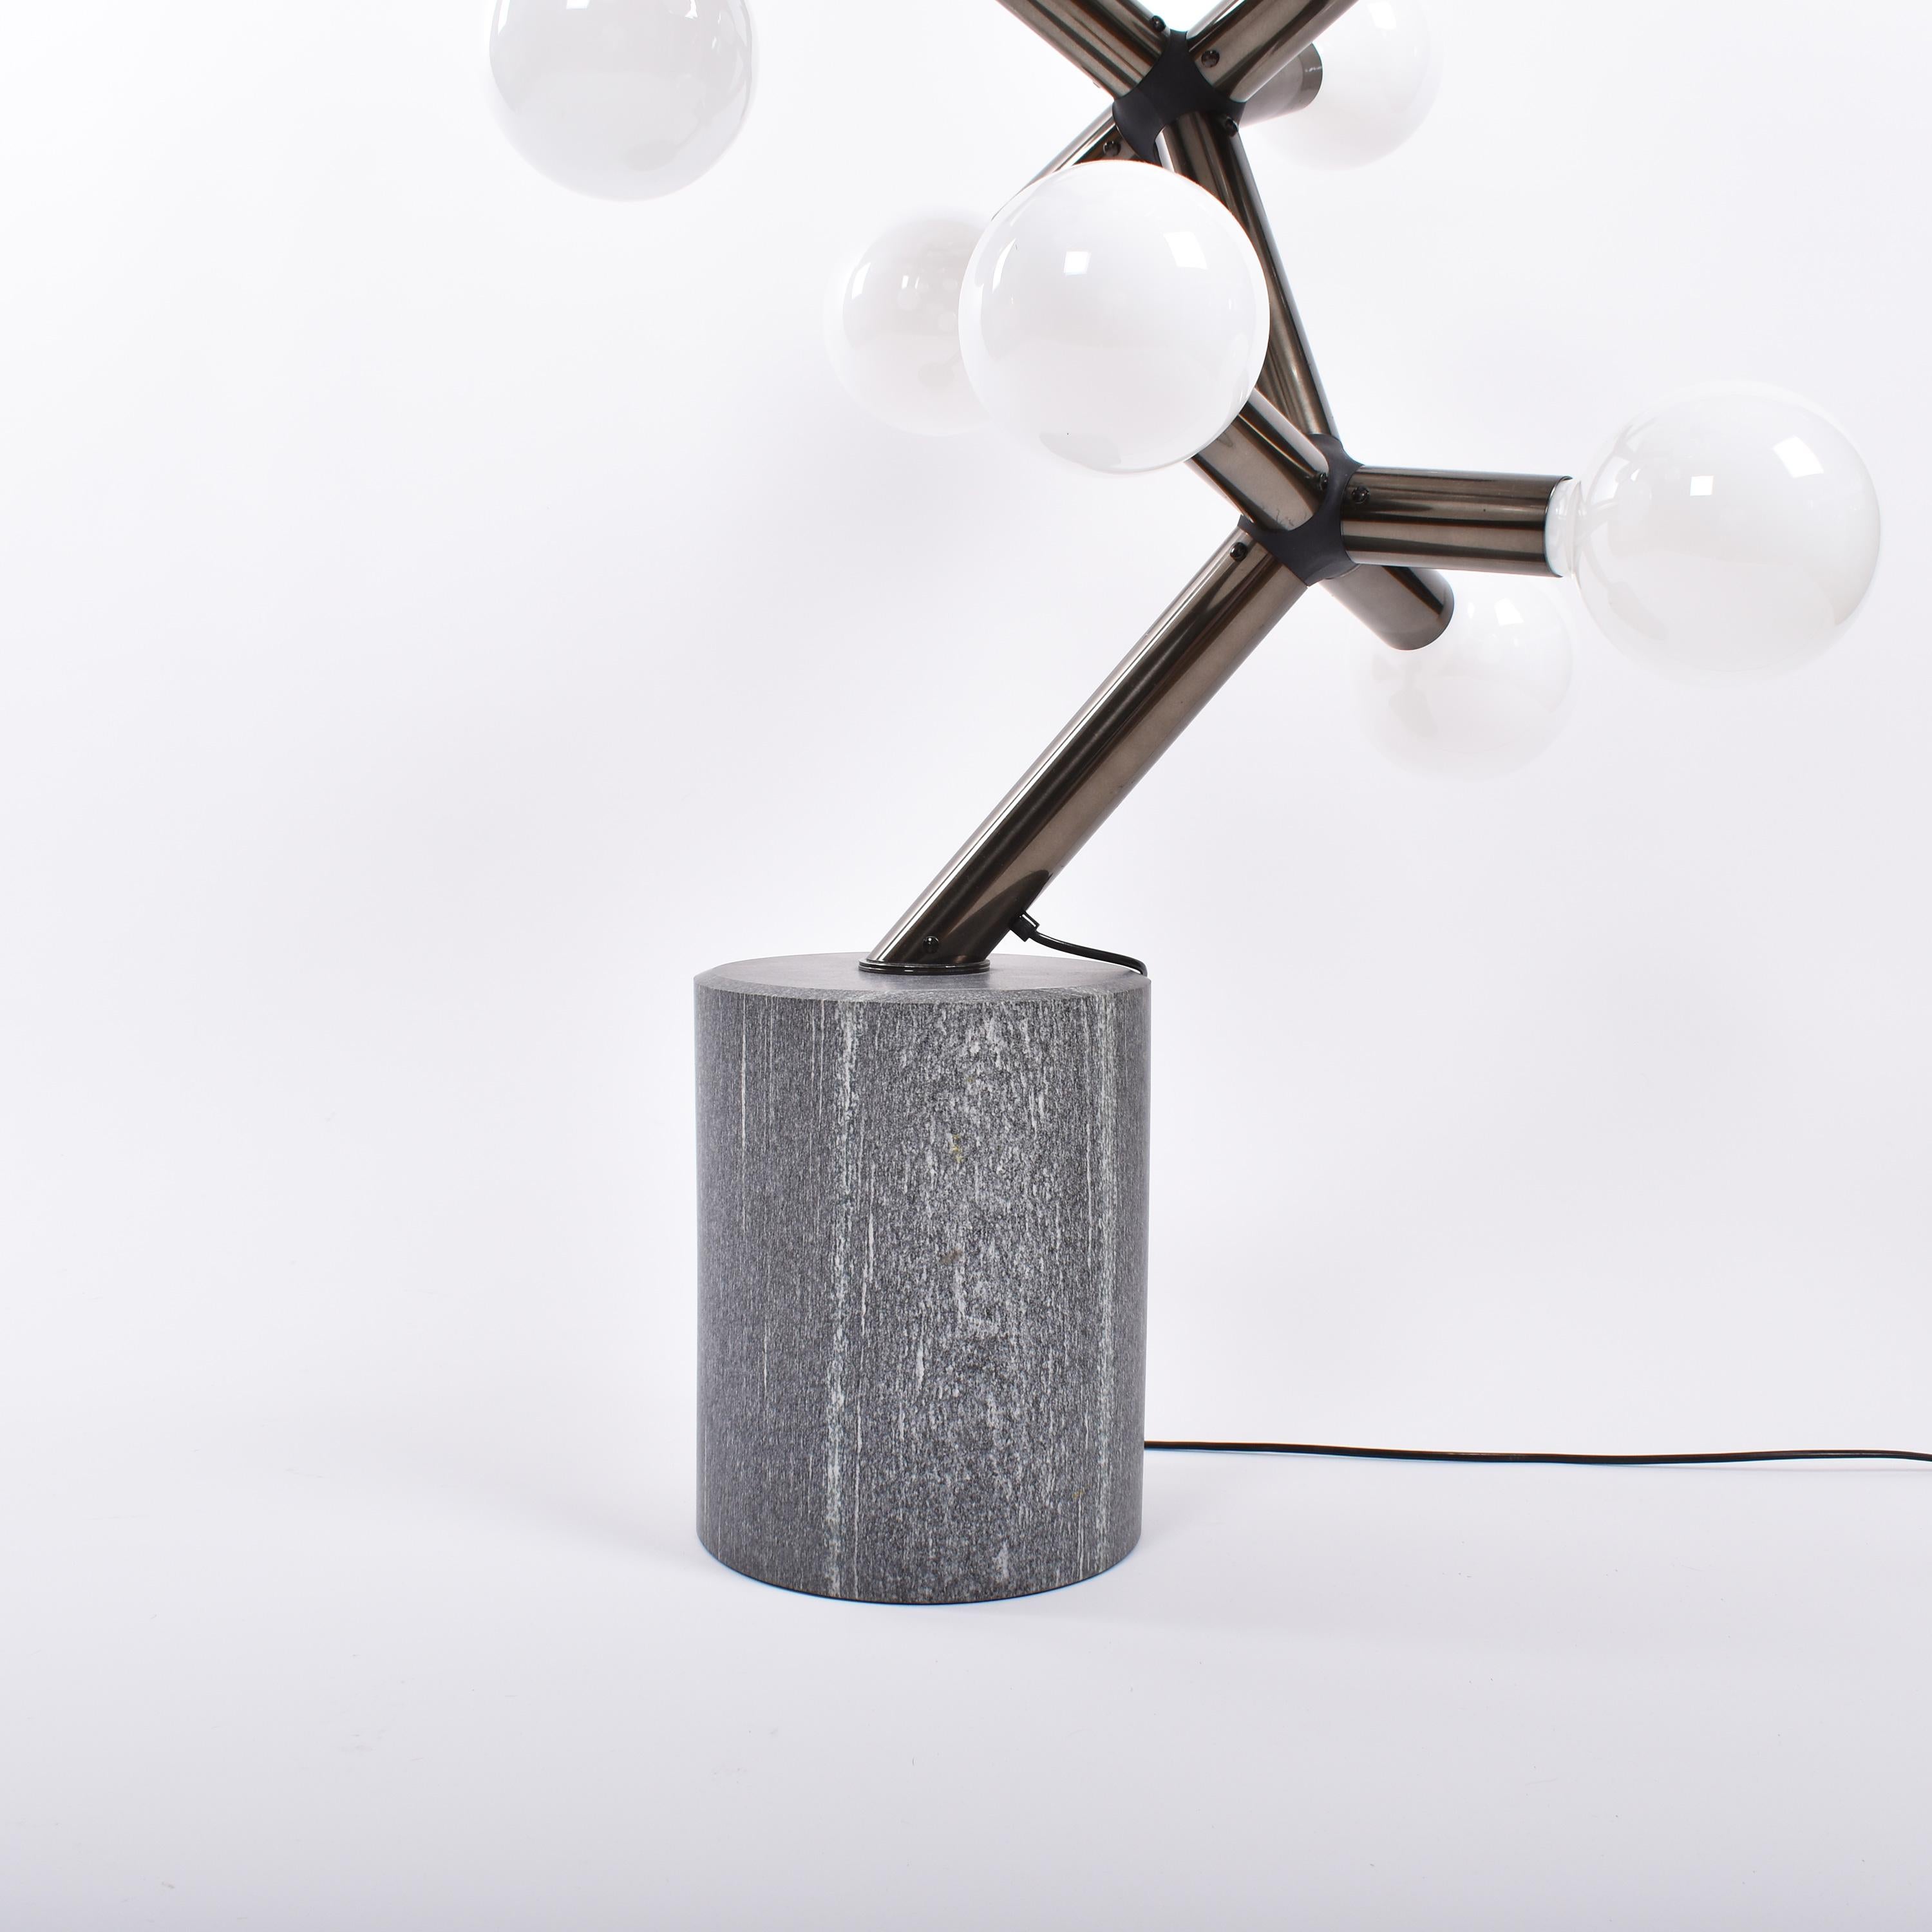 Late 20th Century Mid-Century Modern Atomic Floor Lamp by Trix & Robert Haussmann for Swisslamps